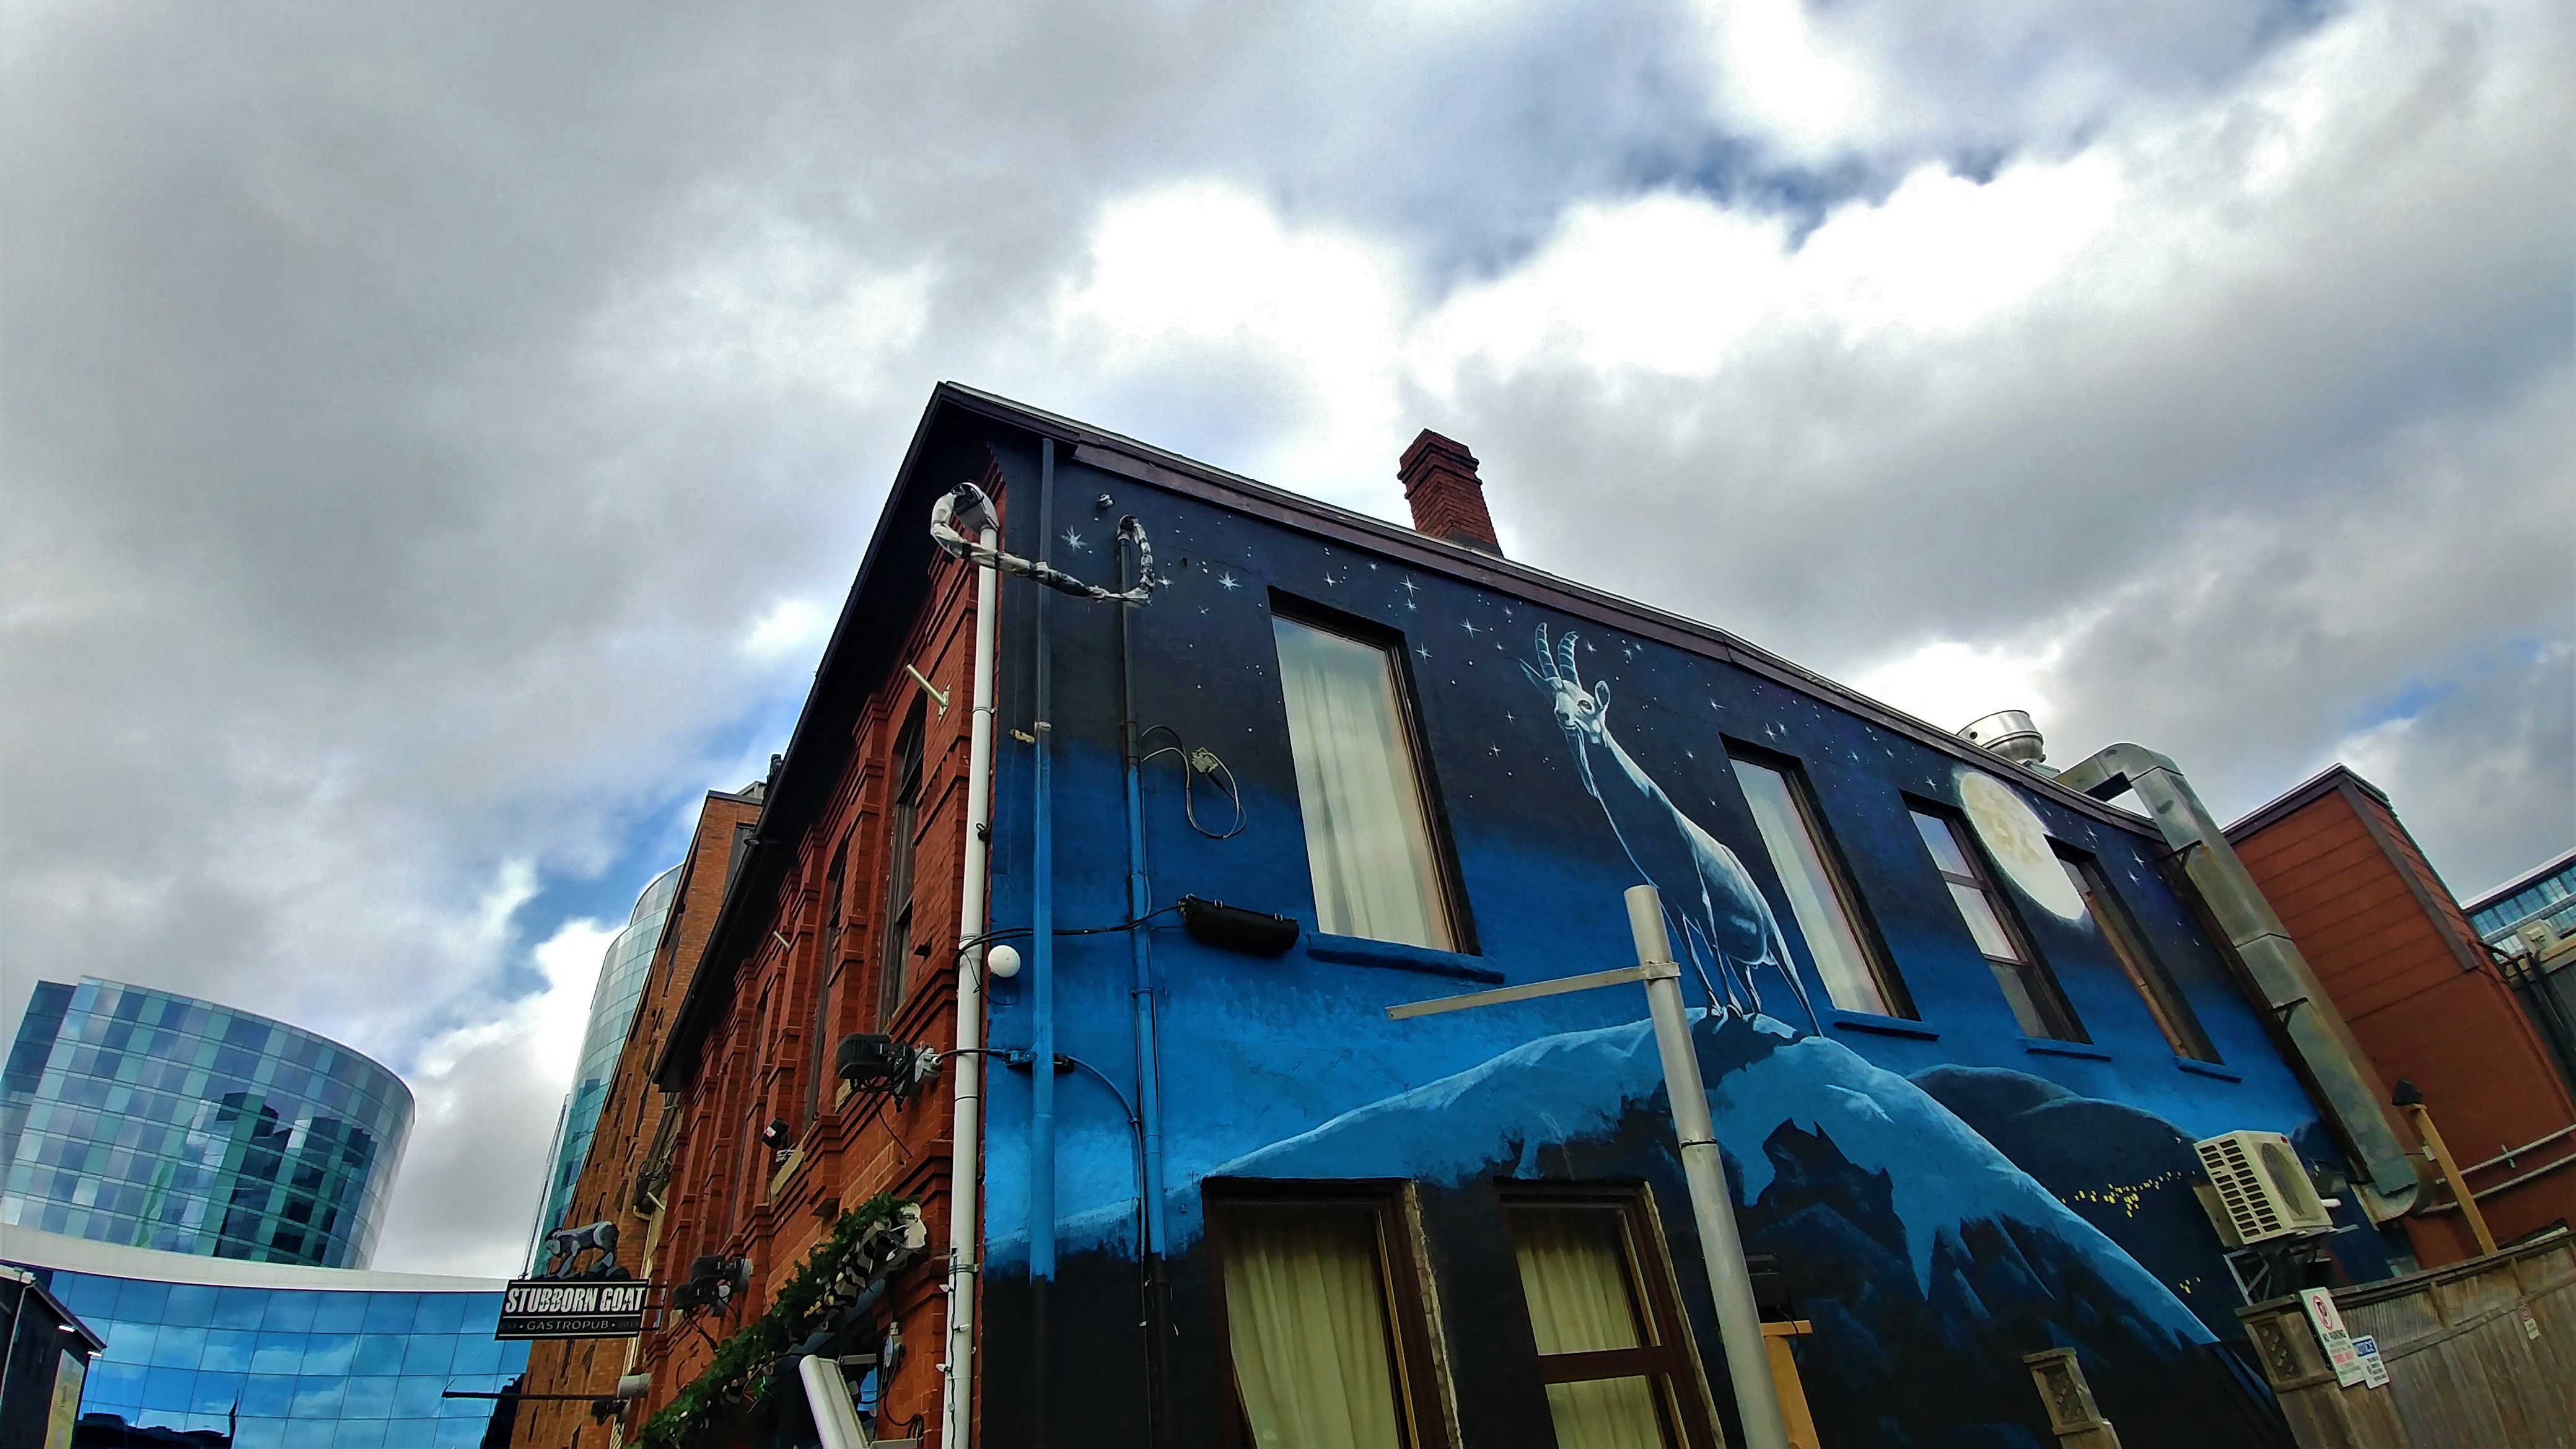 Halifax street art escapade que faire blog voyage canada maritimes arpenter le chemin